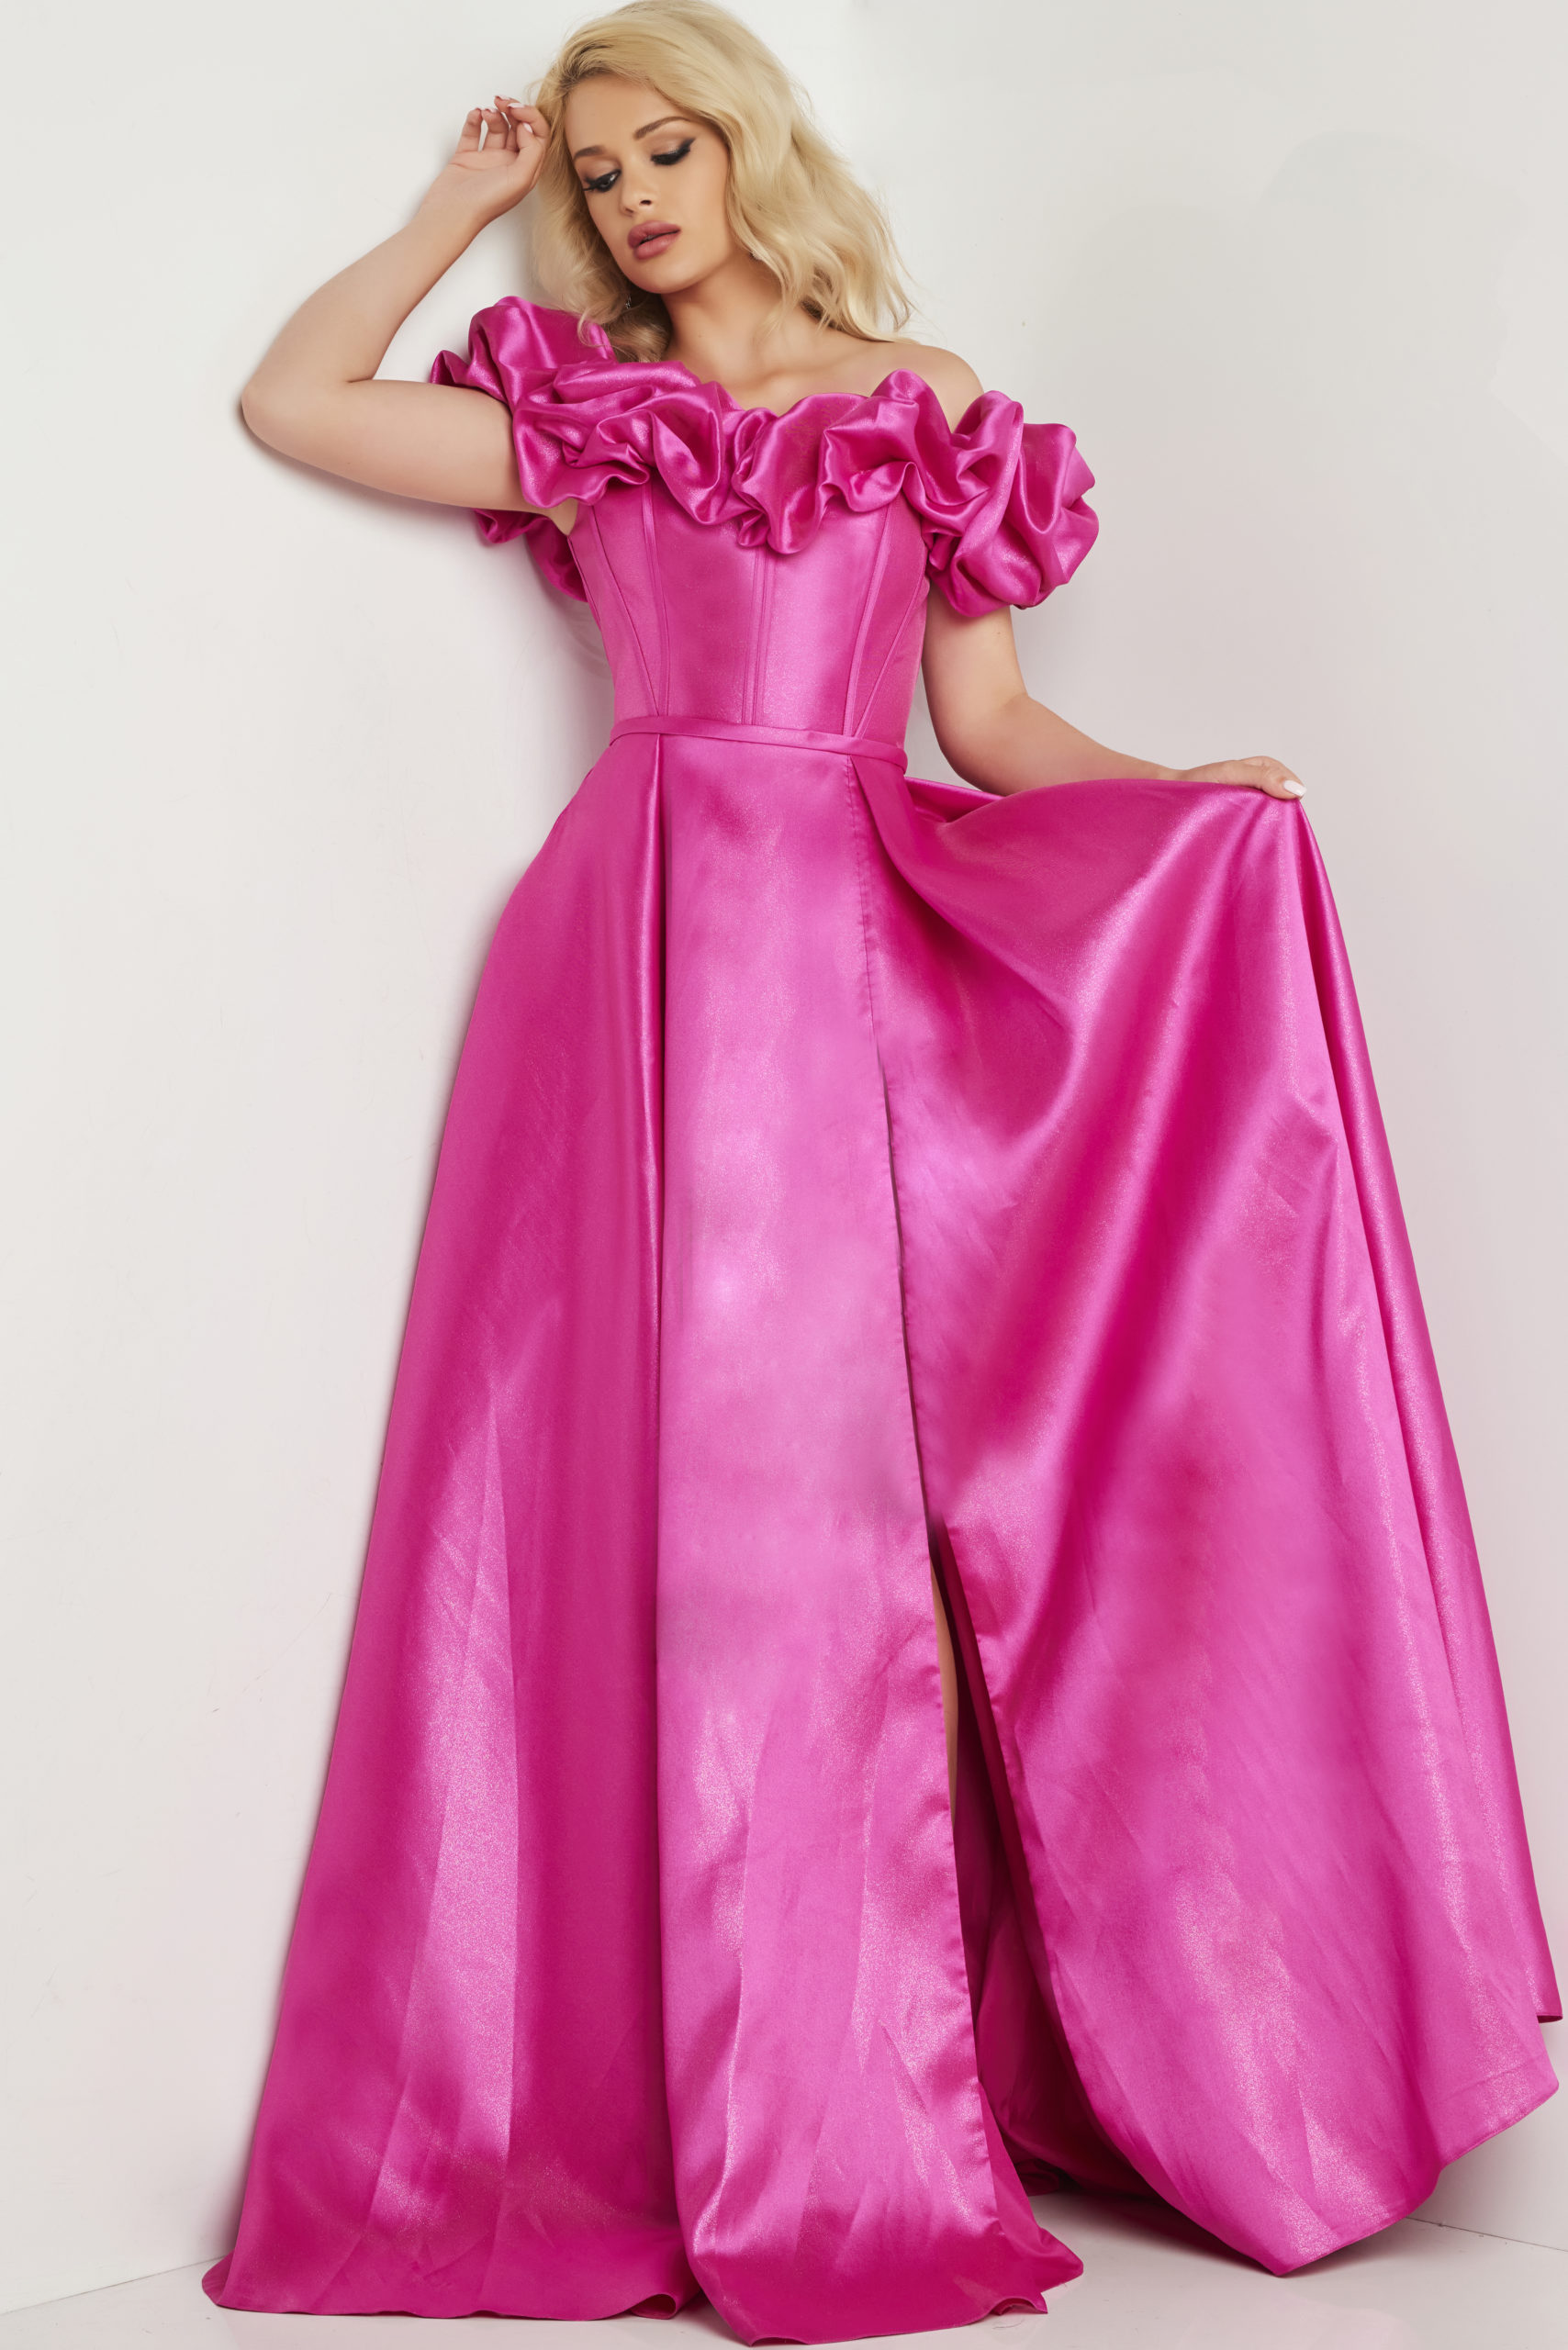 pink dress-Barbie girl. 